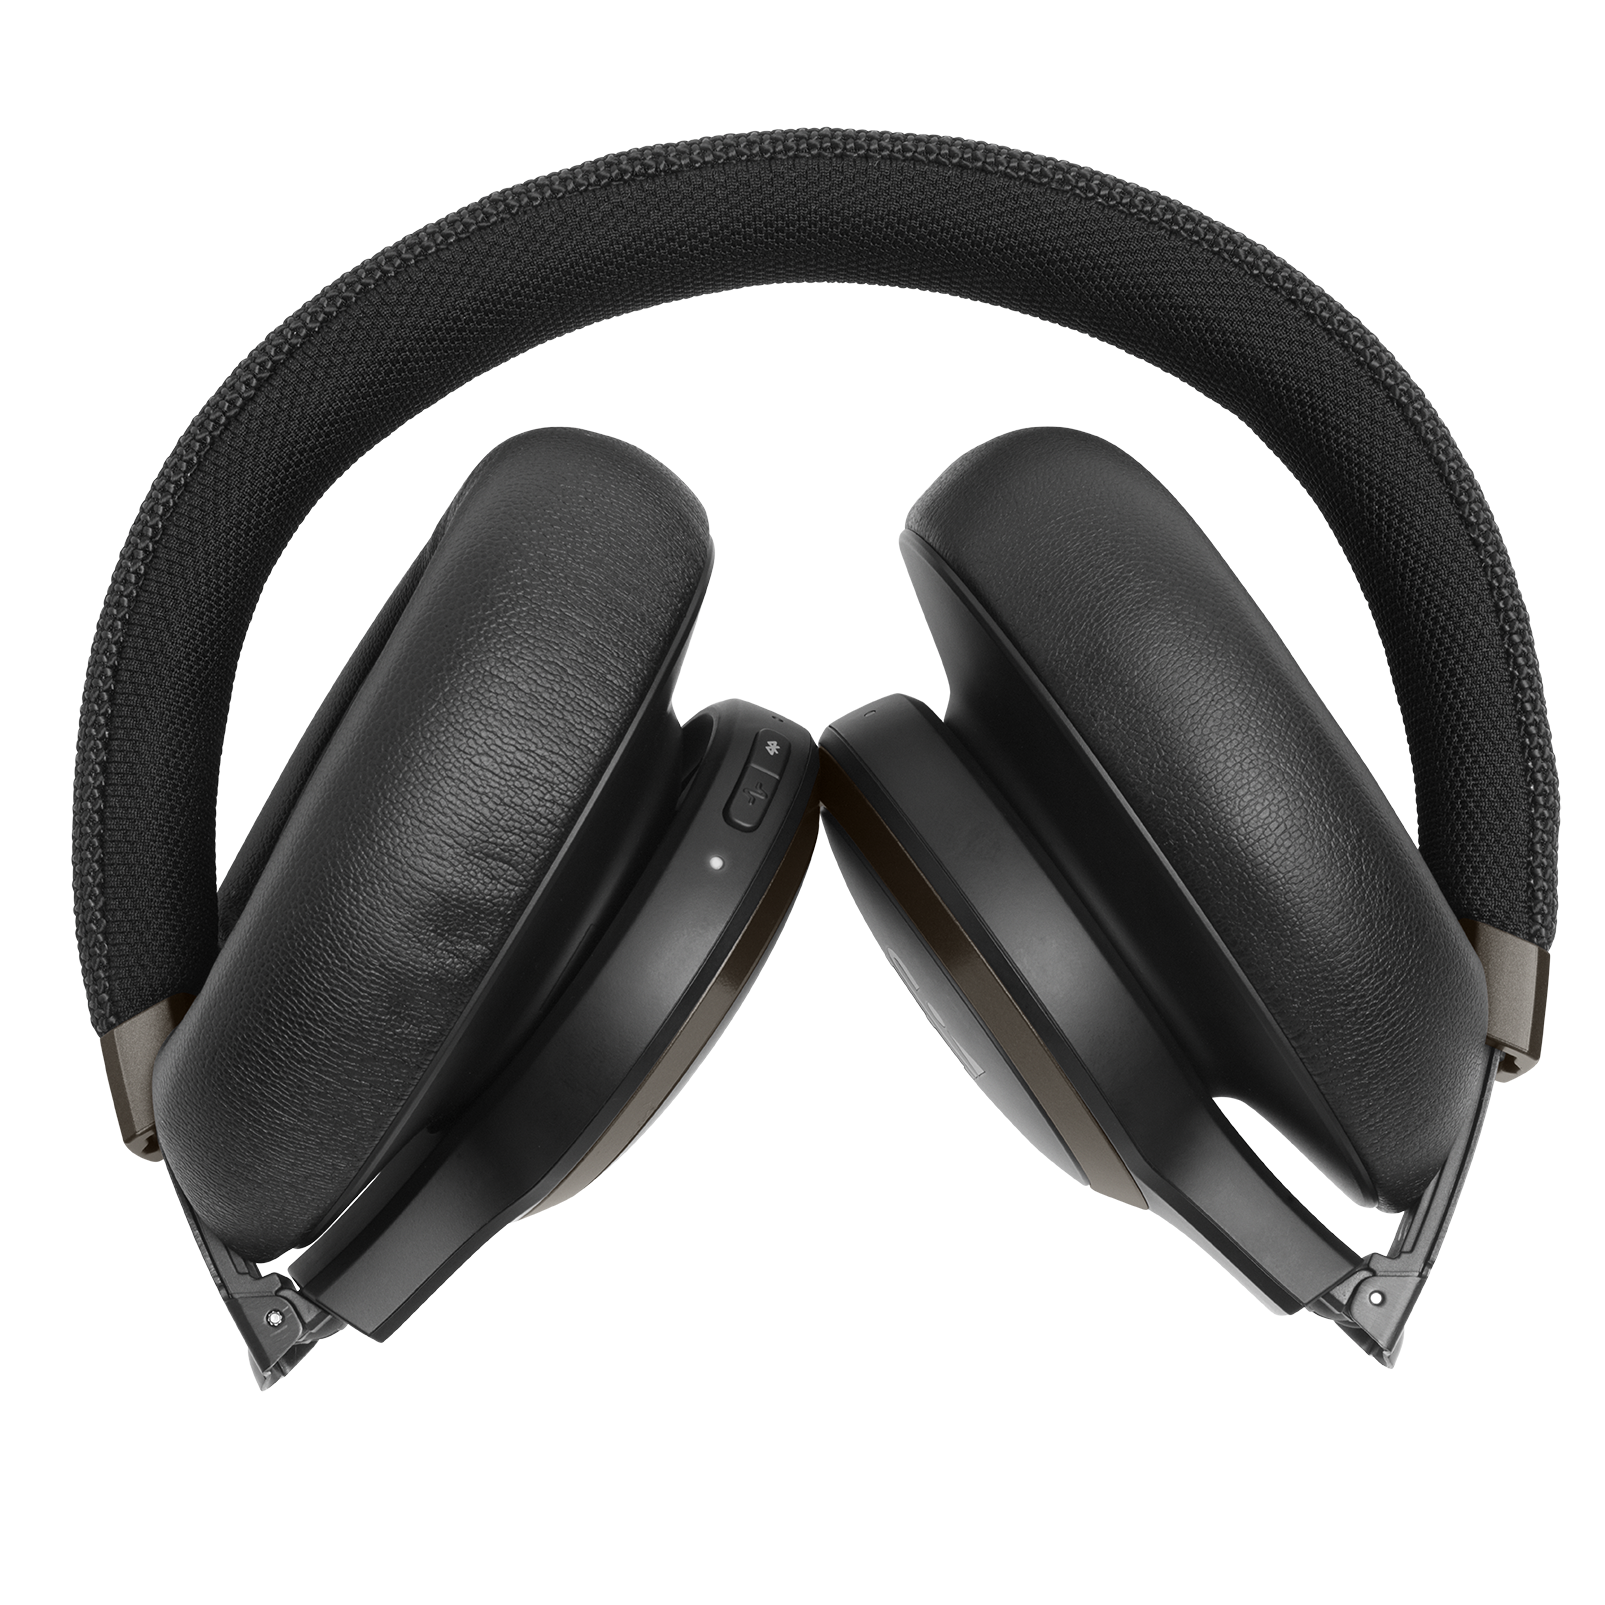 JBL Live 650BTNC - Black - Wireless Over-Ear Noise-Cancelling Headphones - Detailshot 8